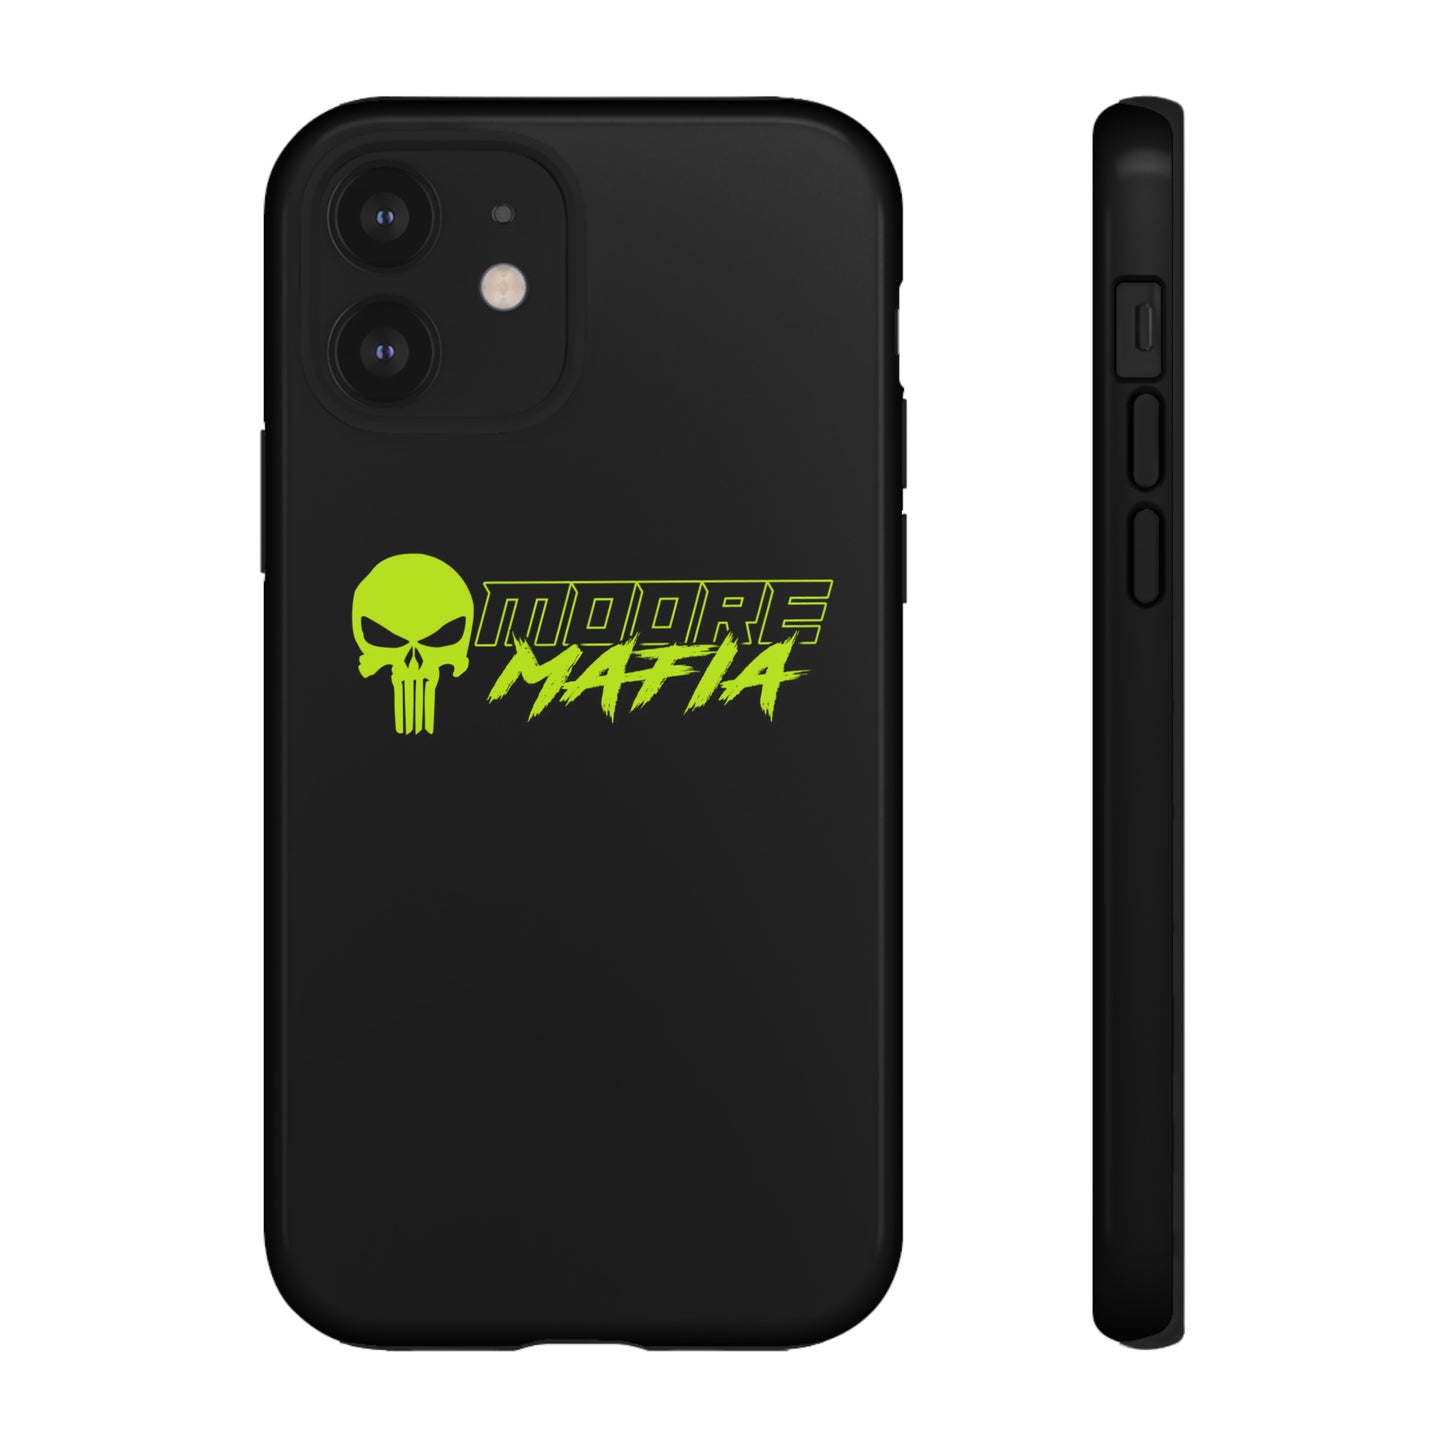 Moore Mafia Phone Cases